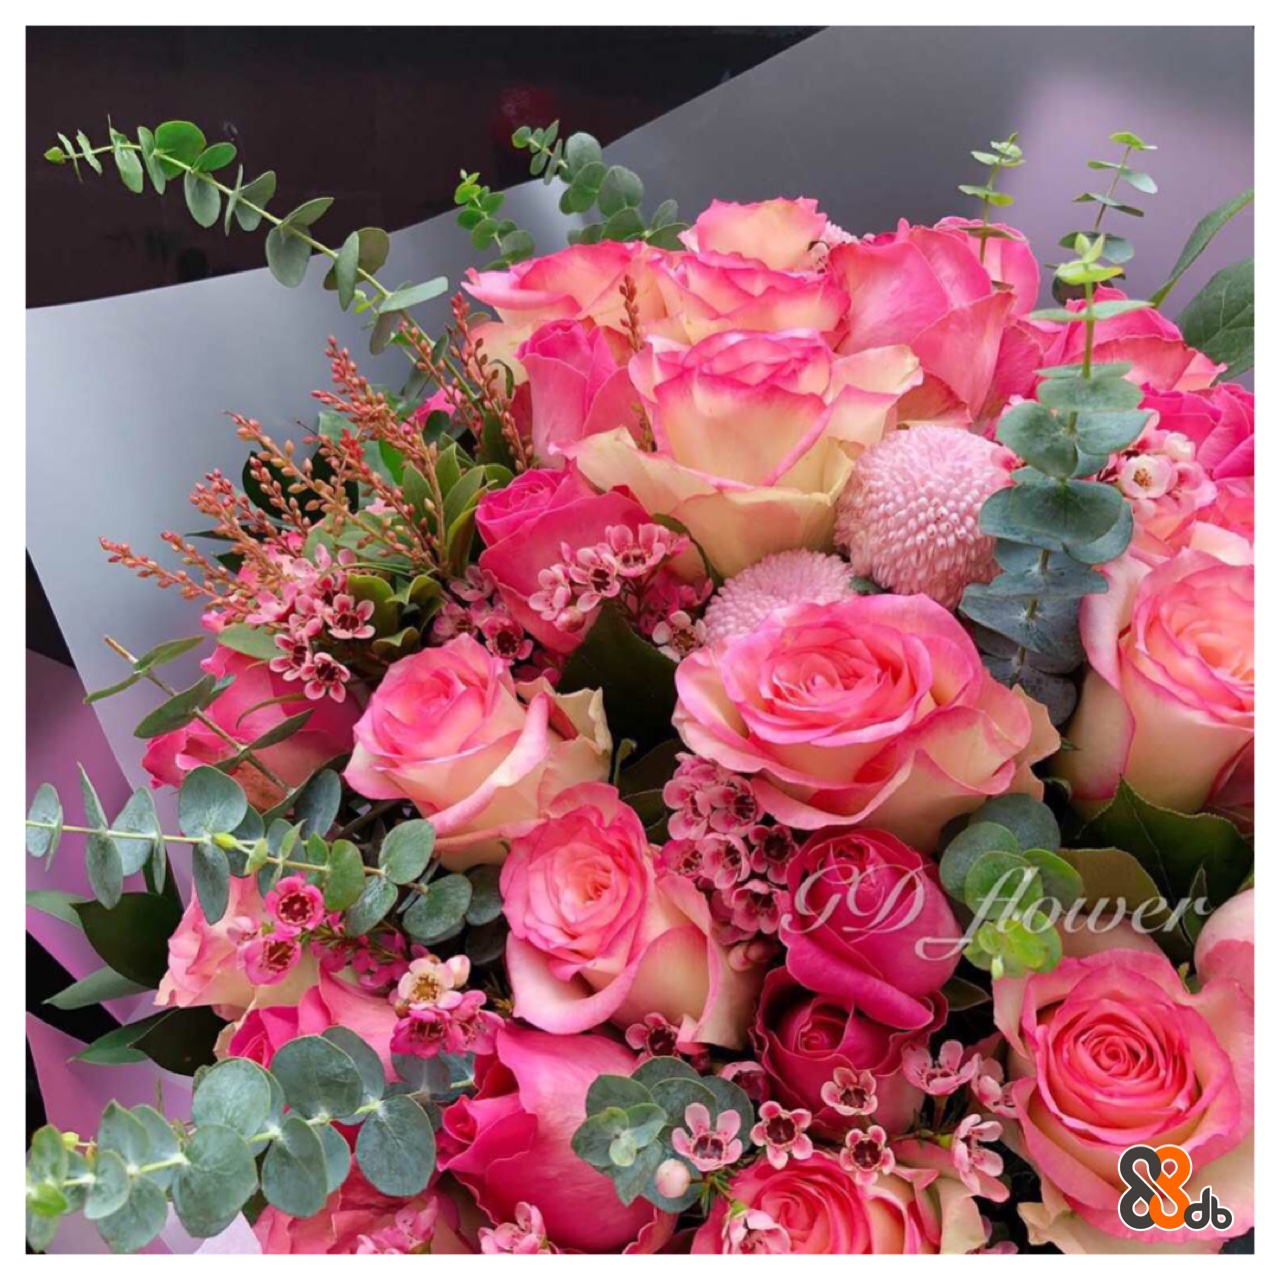  flower,flower arranging,rose,pink,flower bouquet